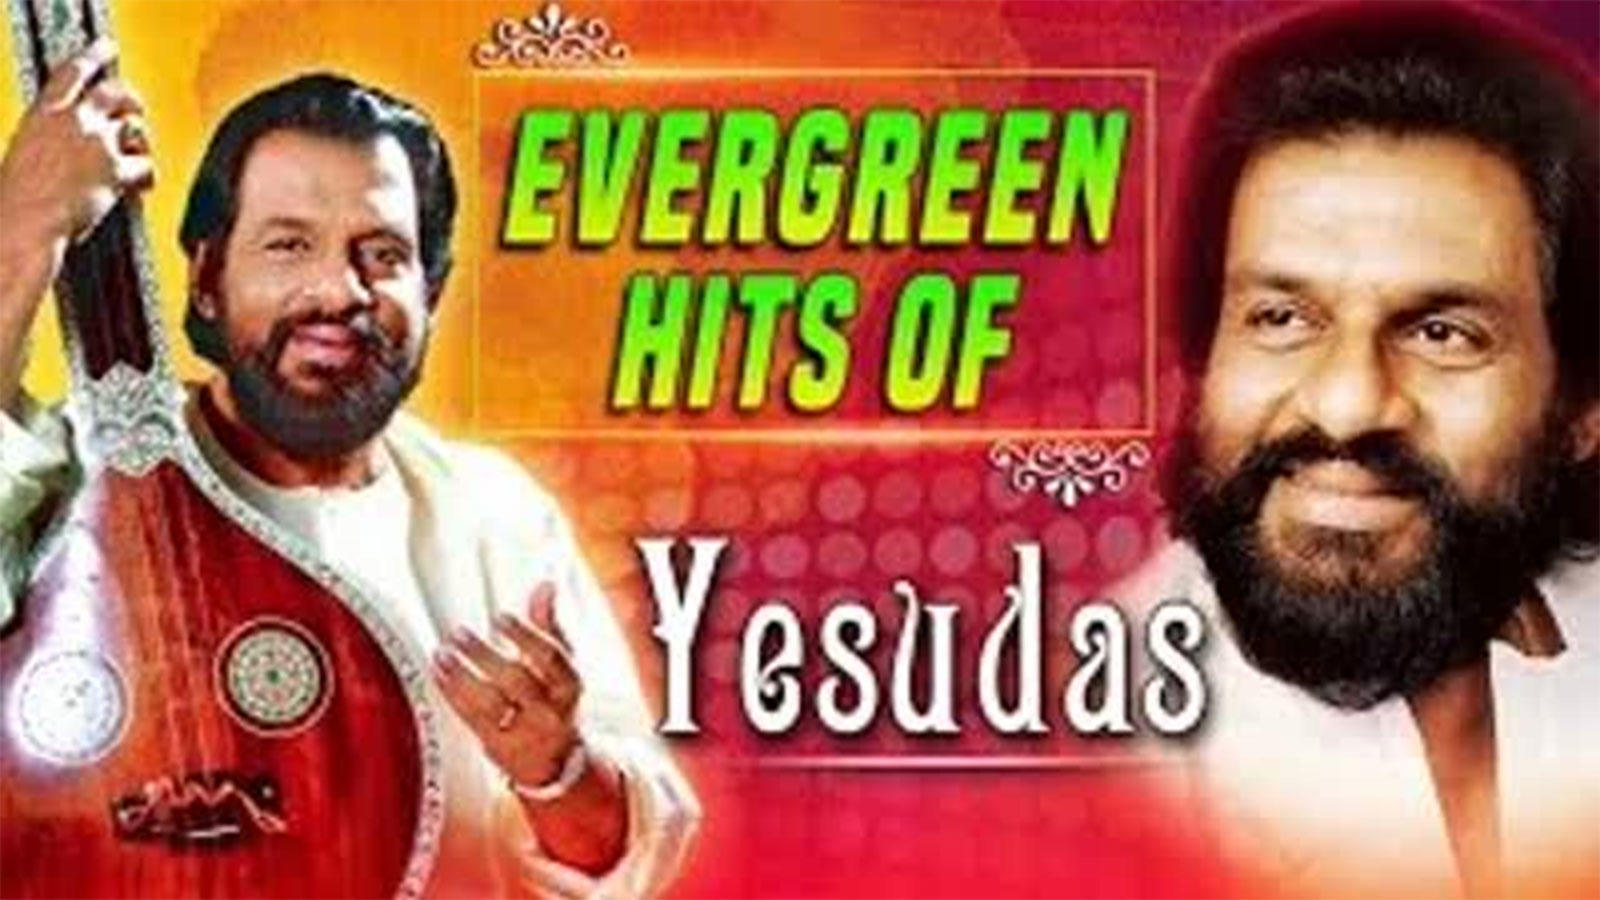 kj yesudas ayyappa songs tamil mp3 free download